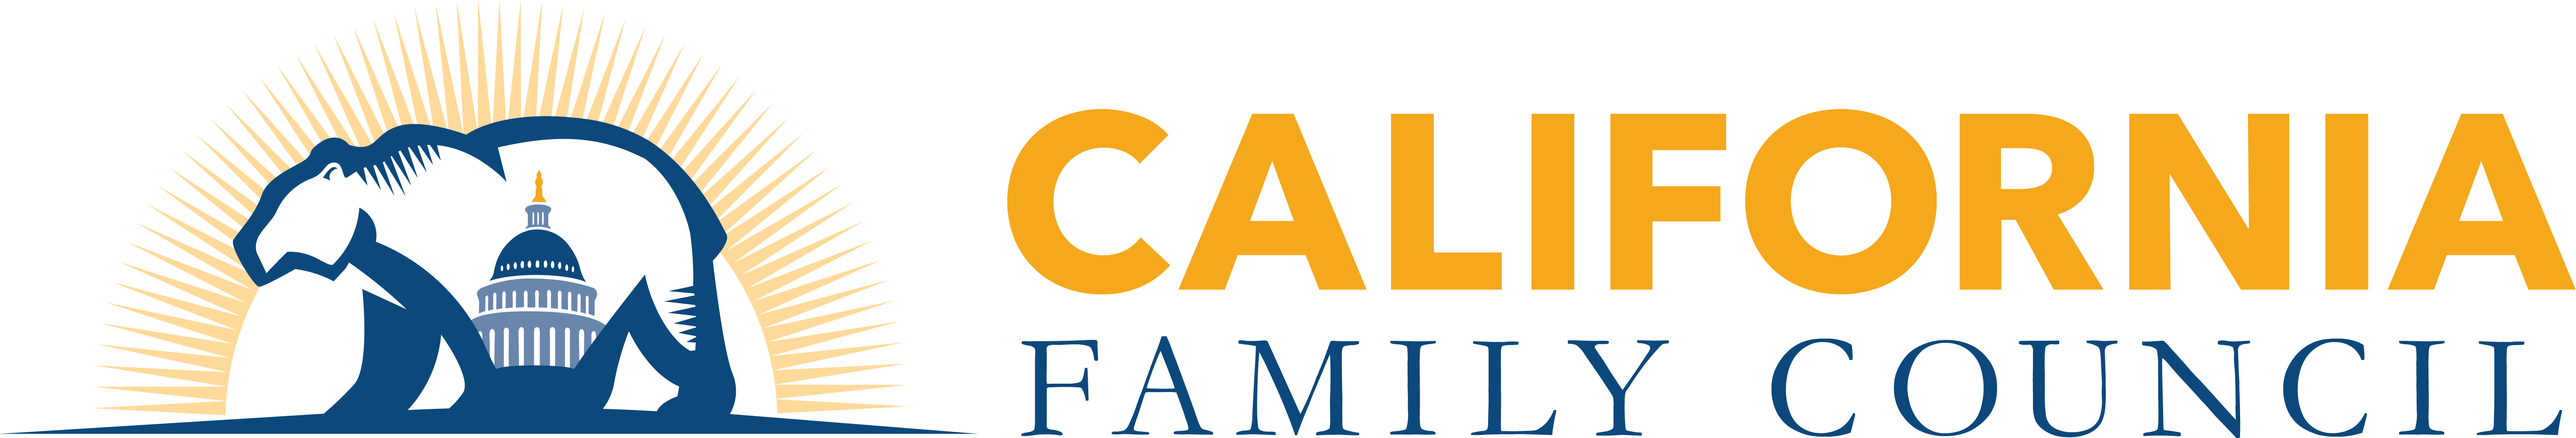 AB 2223 California Family Council